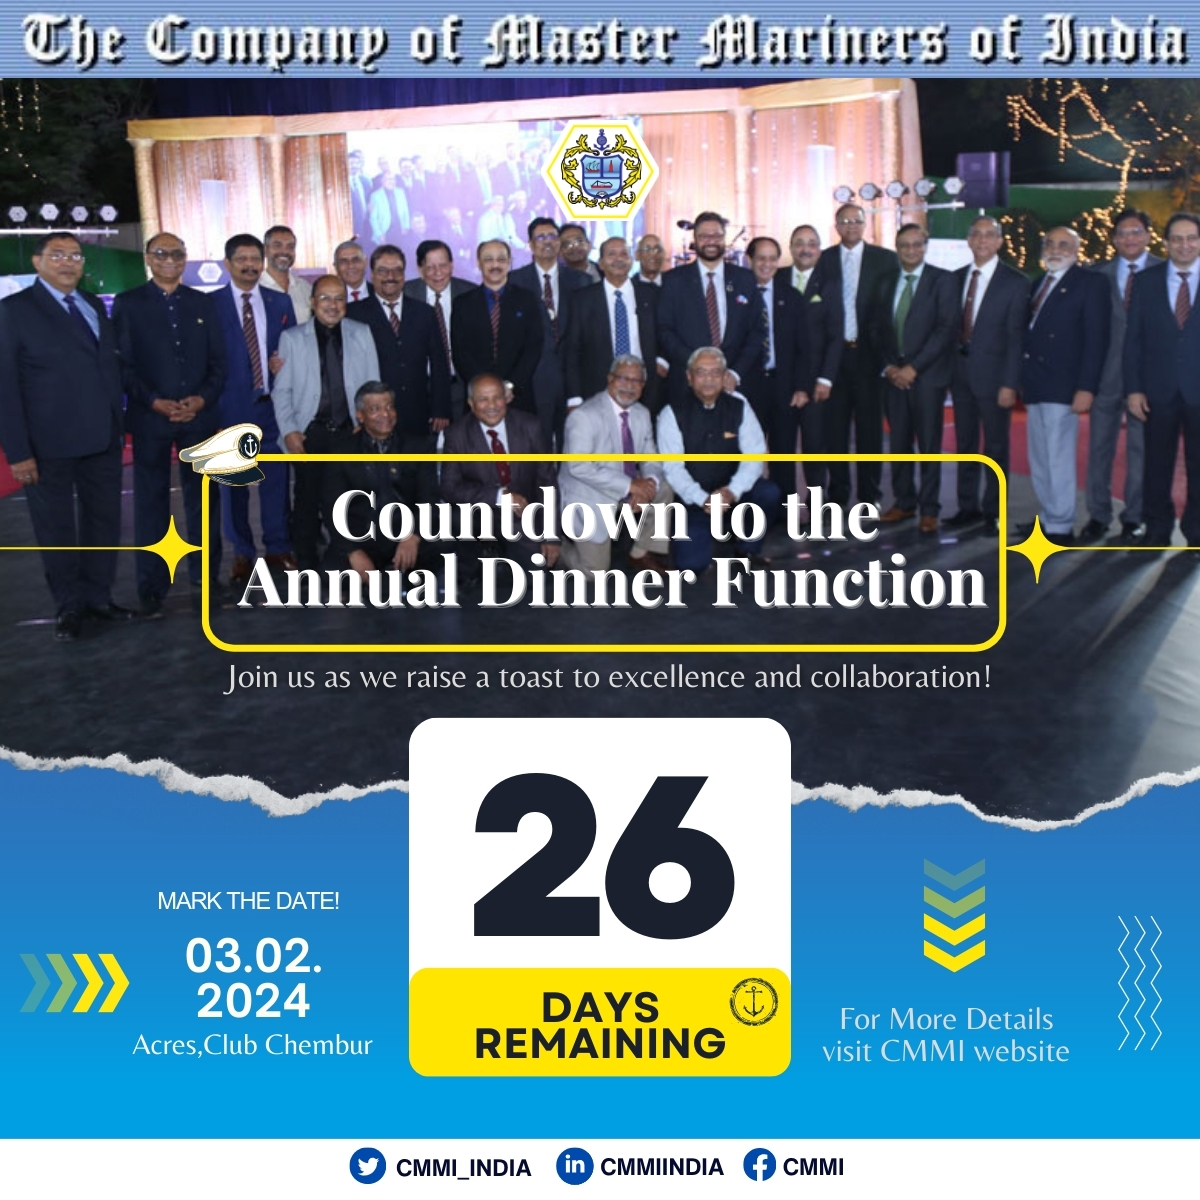 Countdown to the CMMI Annual Dinner Function.

Just 26 Days to Go!

#event #maritimenews #maritimeindustry #thecompanyofmastermarinersindia #cmmimemberscommunity #merchantnavy #seafarers #seafarersarekeyworkers #lifeatsea #corporateevent #seaman #maritime